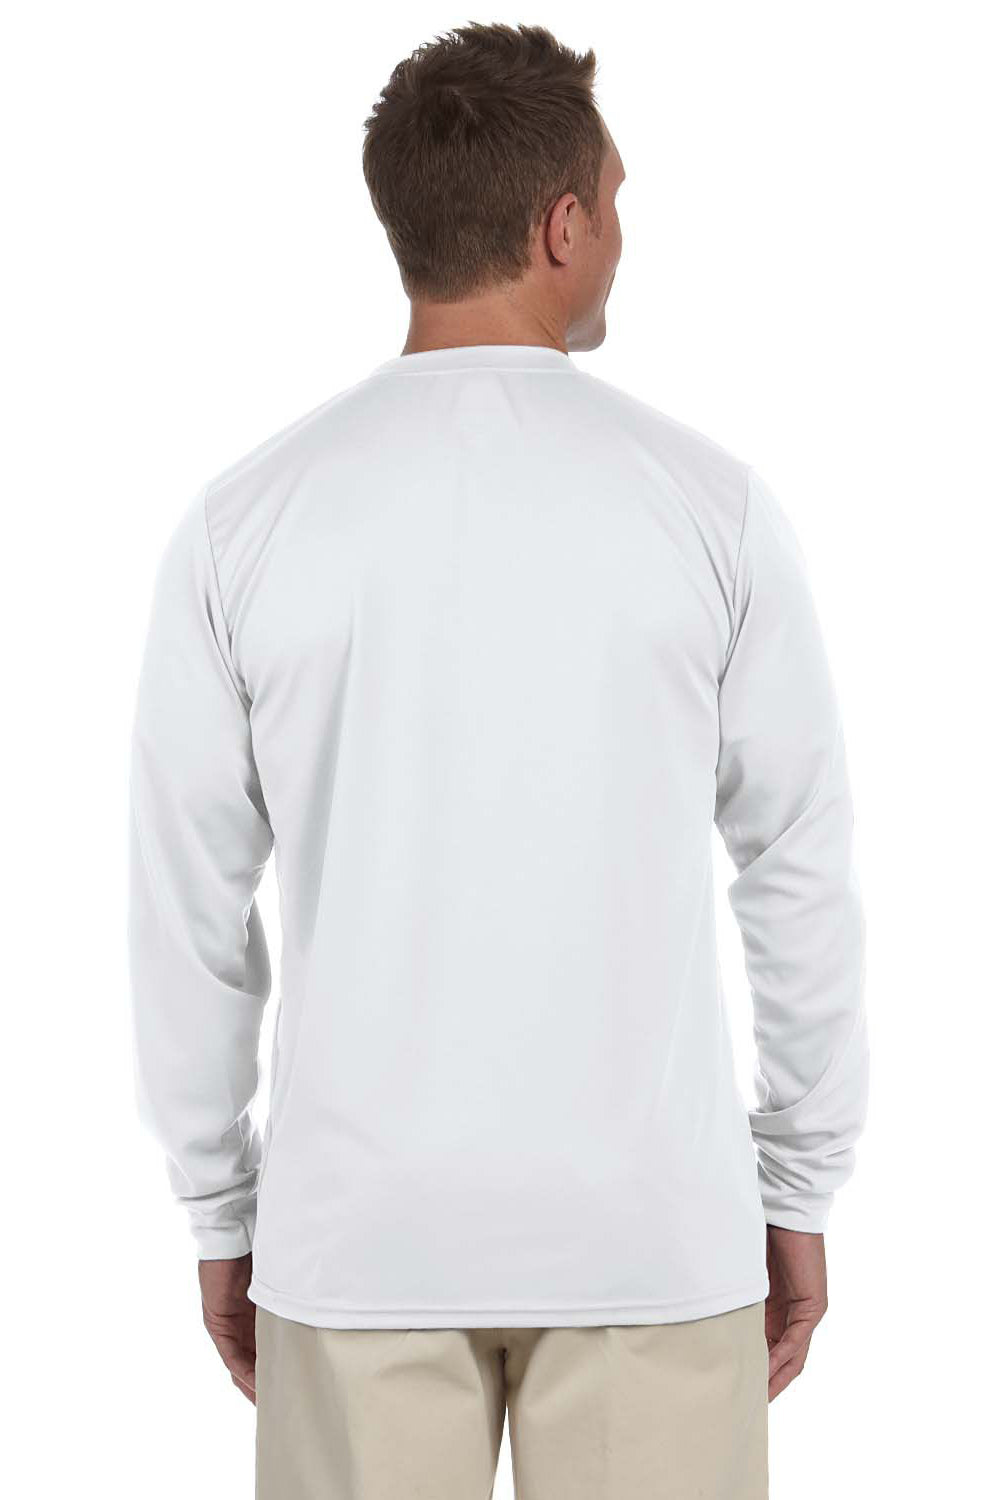 Augusta Sportswear 788 Mens Moisture Wicking Long Sleeve Crewneck T-Shirt White Model Back